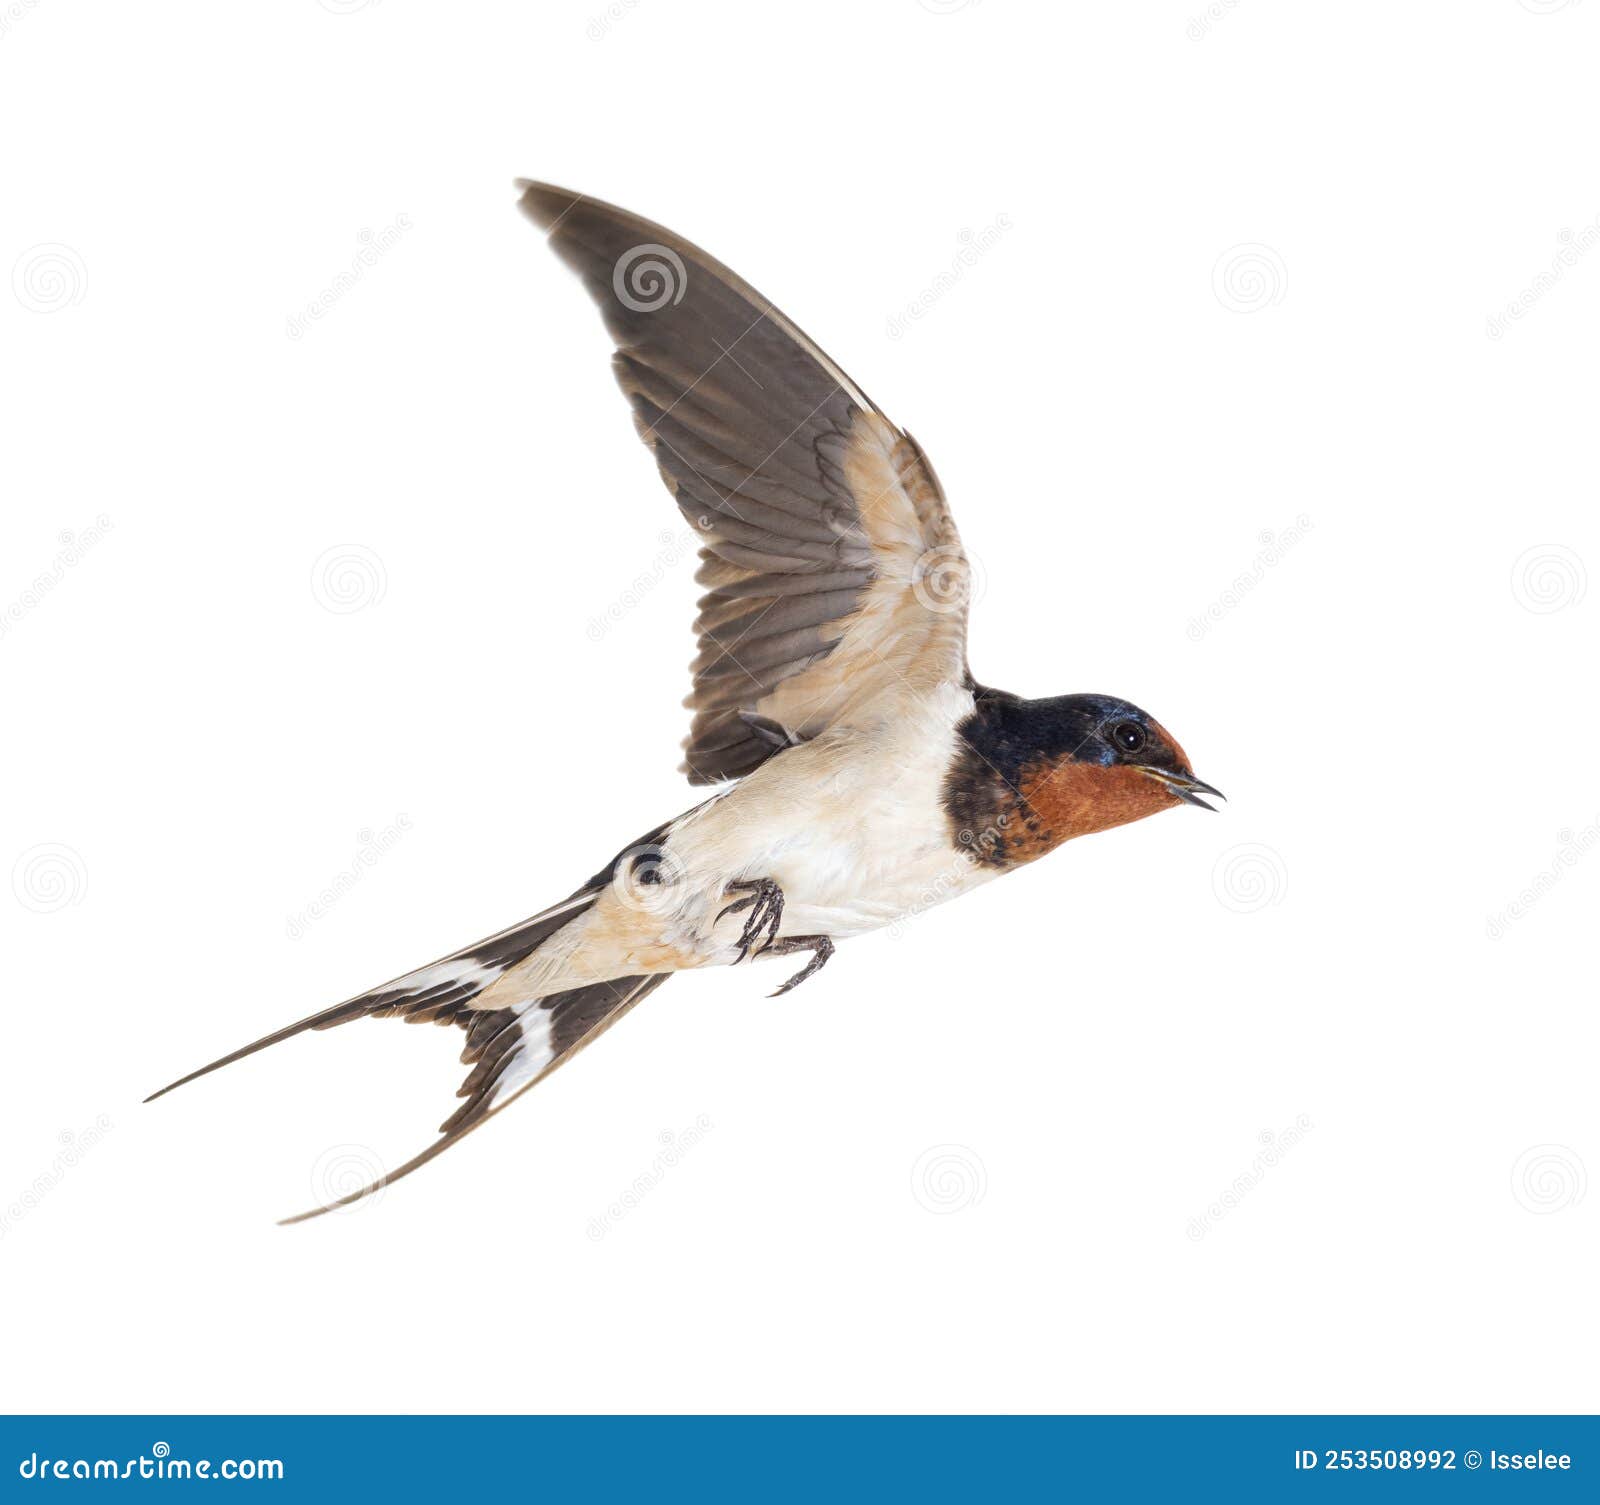 barn swallow flying wings spread, bird, hirundo rustica, flying against white